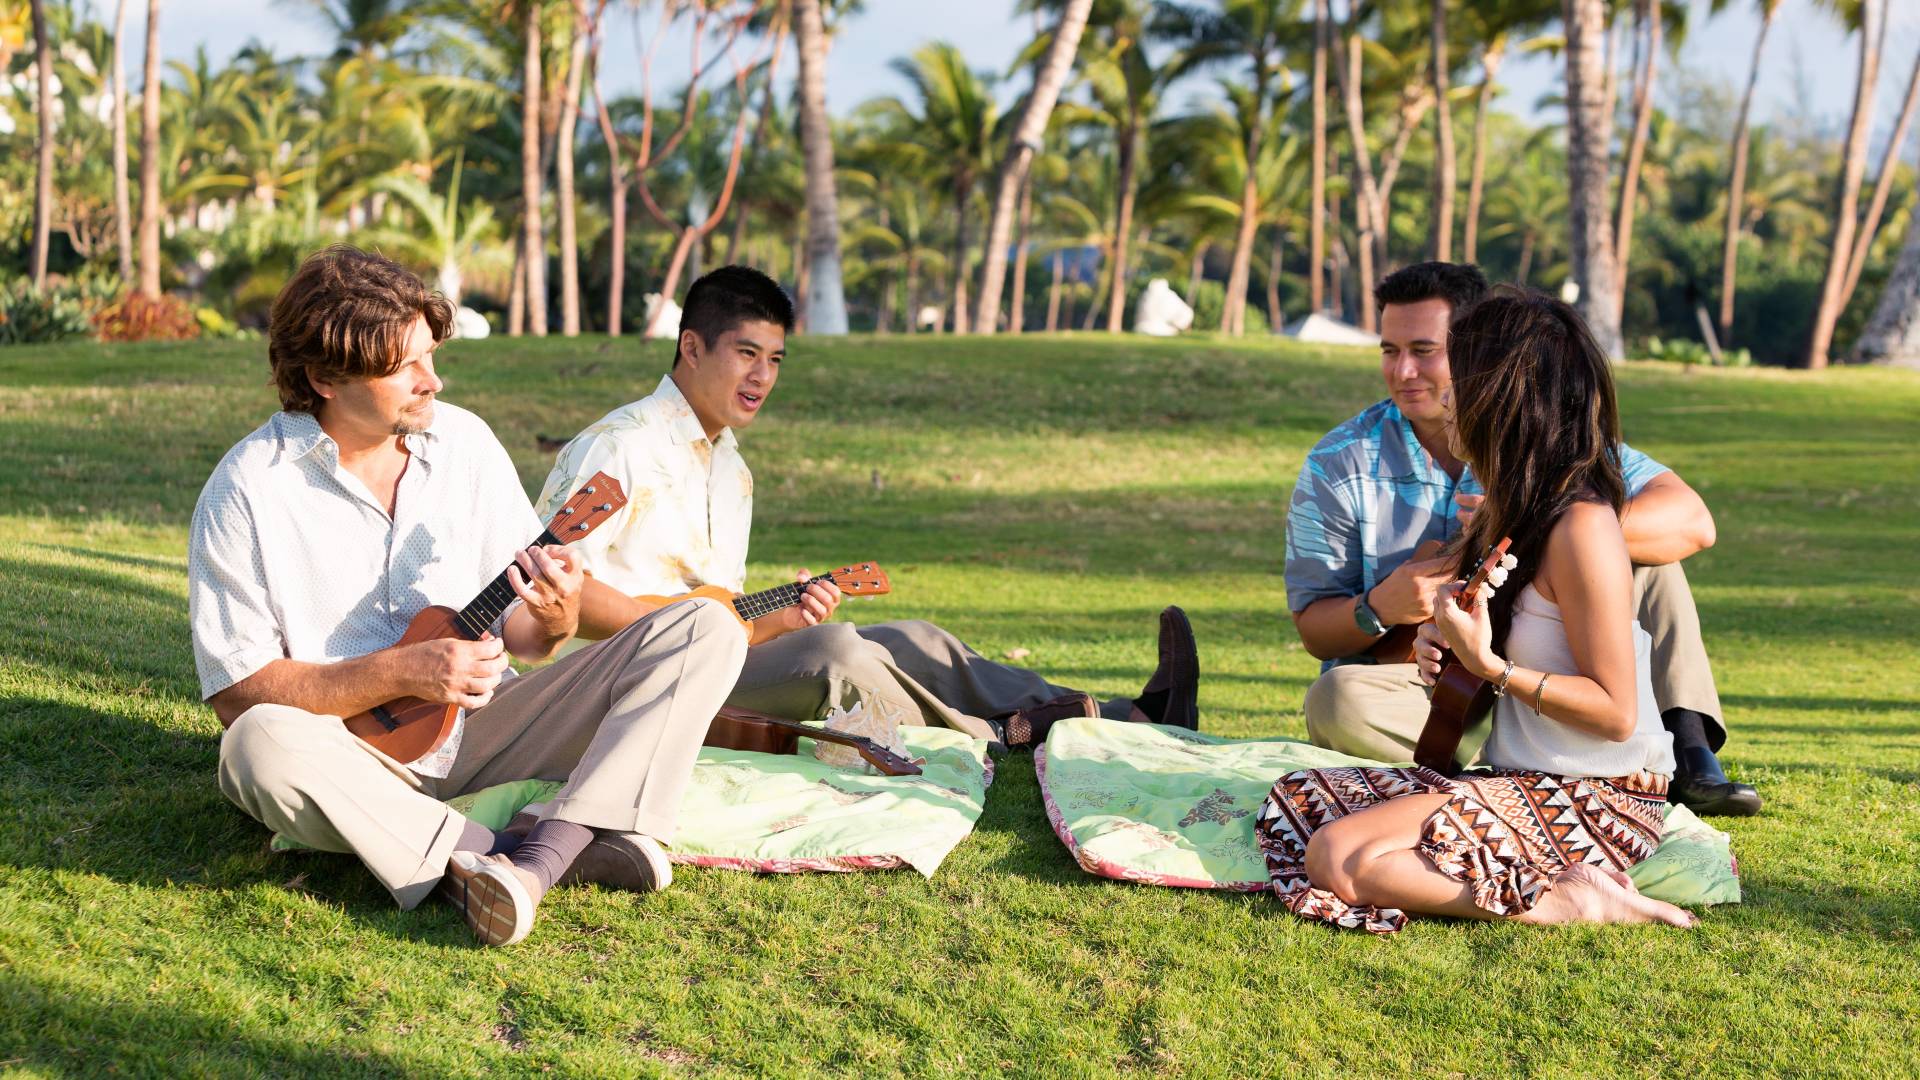 Group of people playing ukuleles